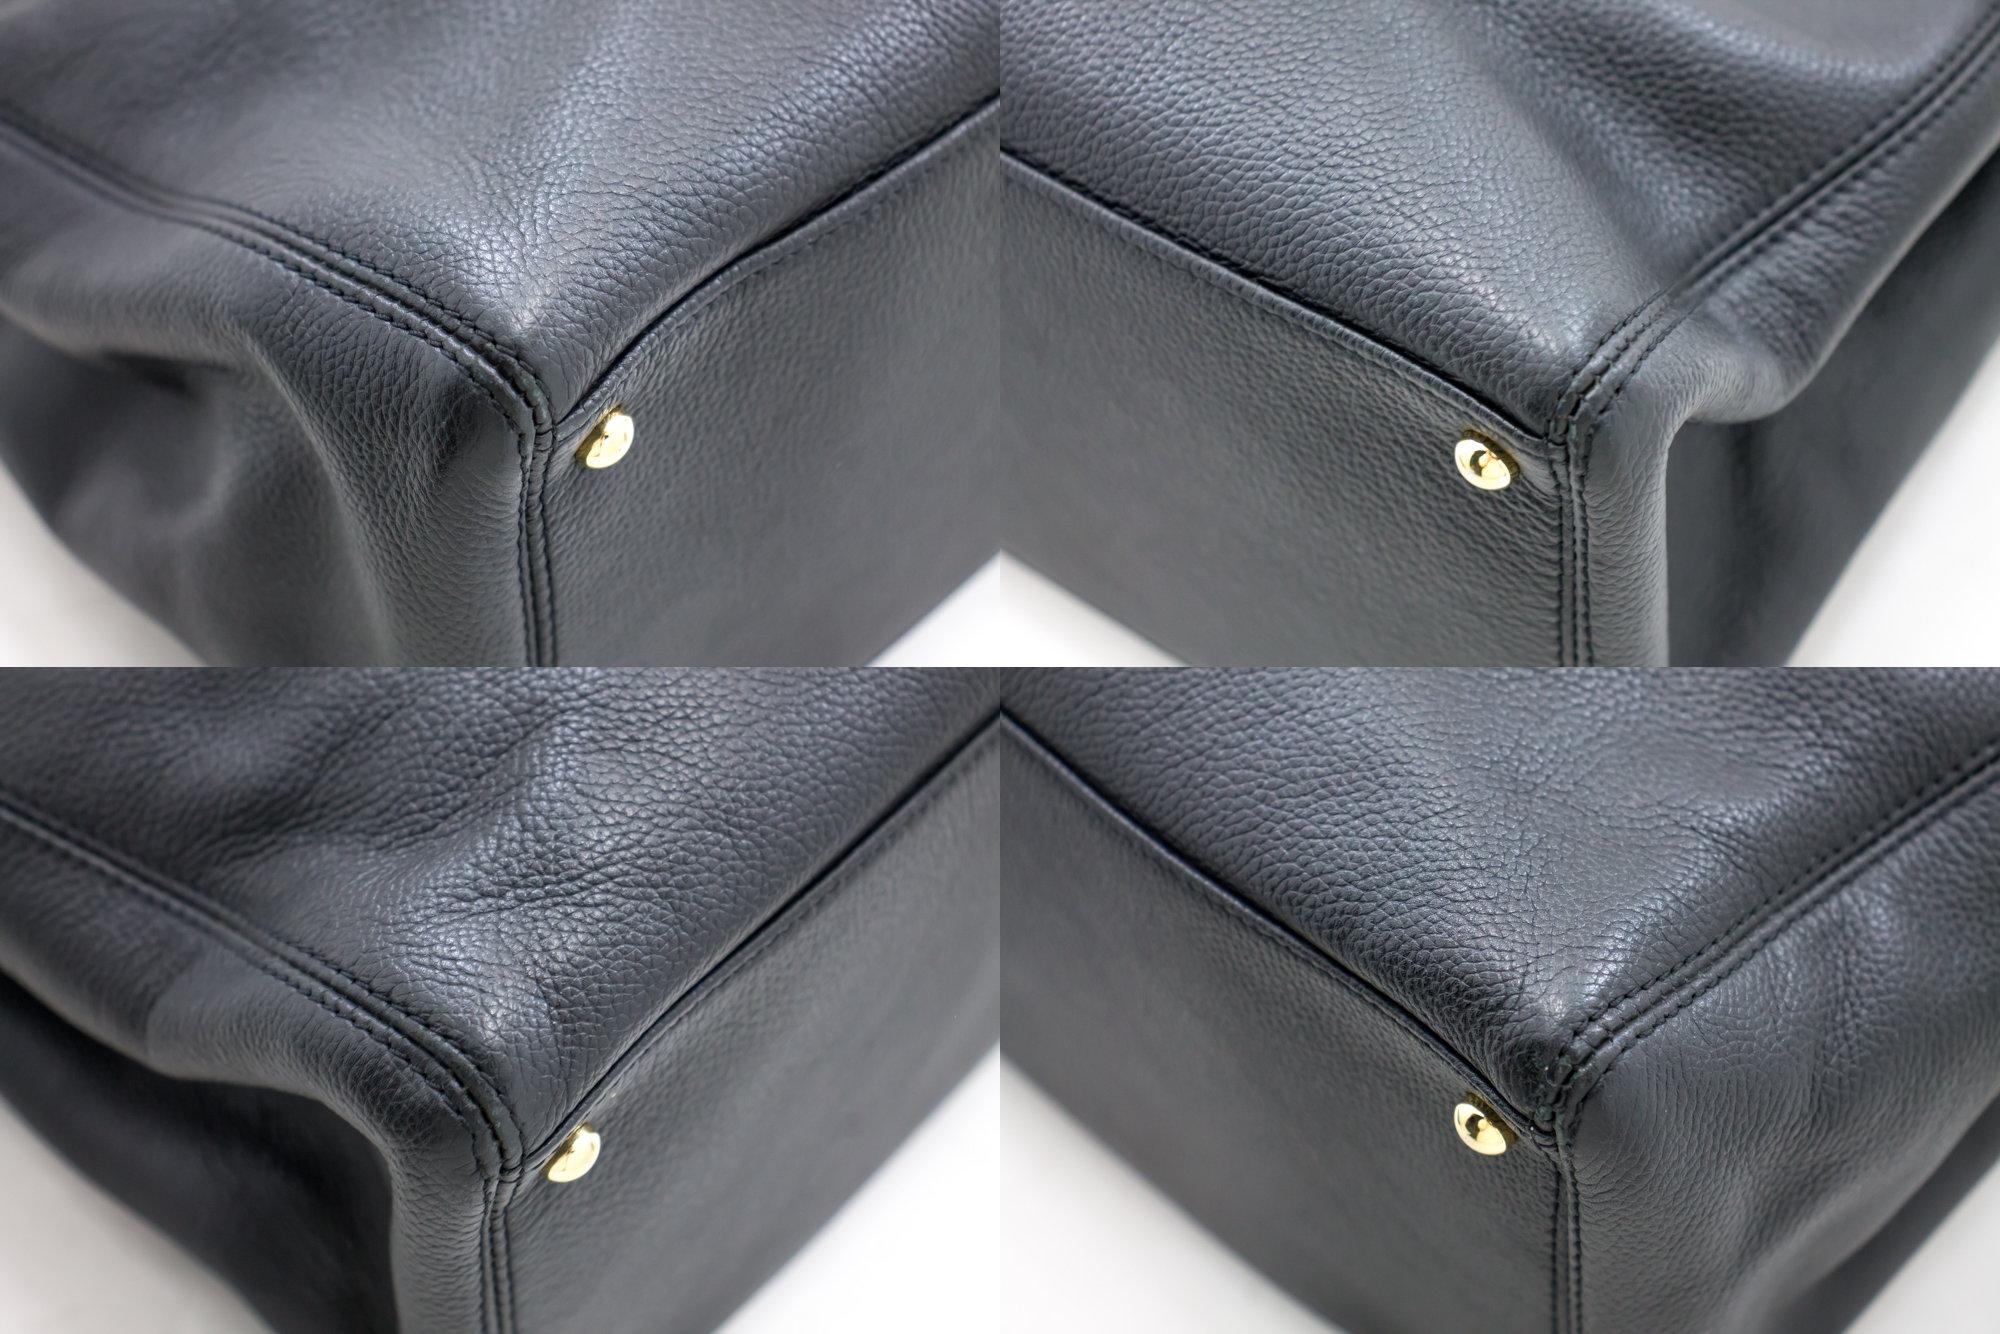 CHANEL Executive Tote Caviar Shoulder Bag Handbag Black Gold Strap 2